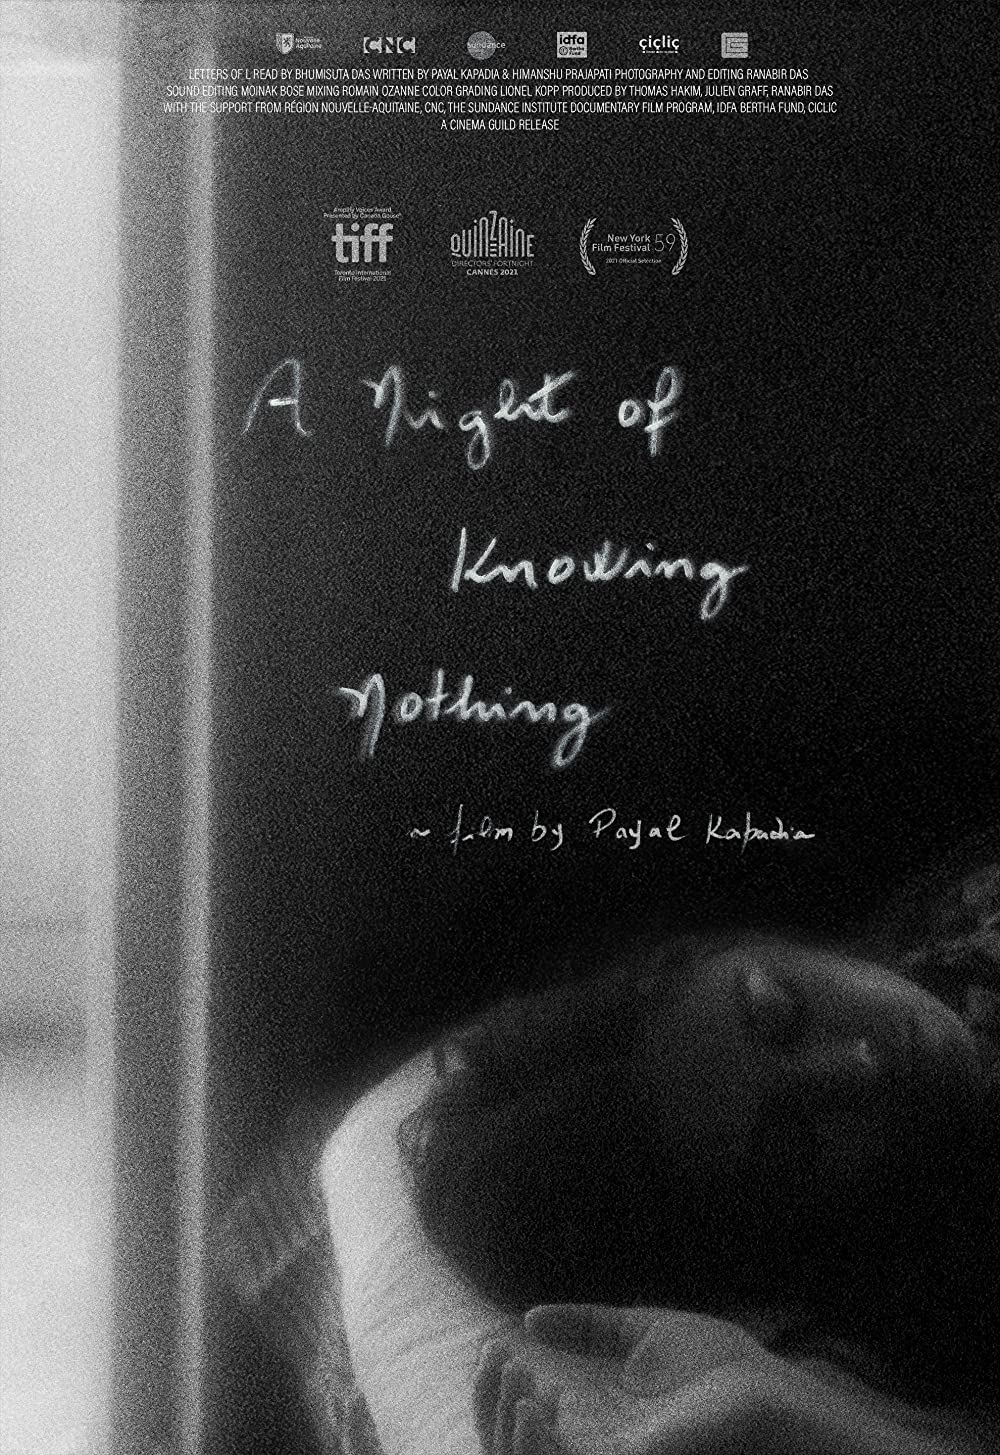 دانلود فیلم A Night of Knowing Nothing 2021